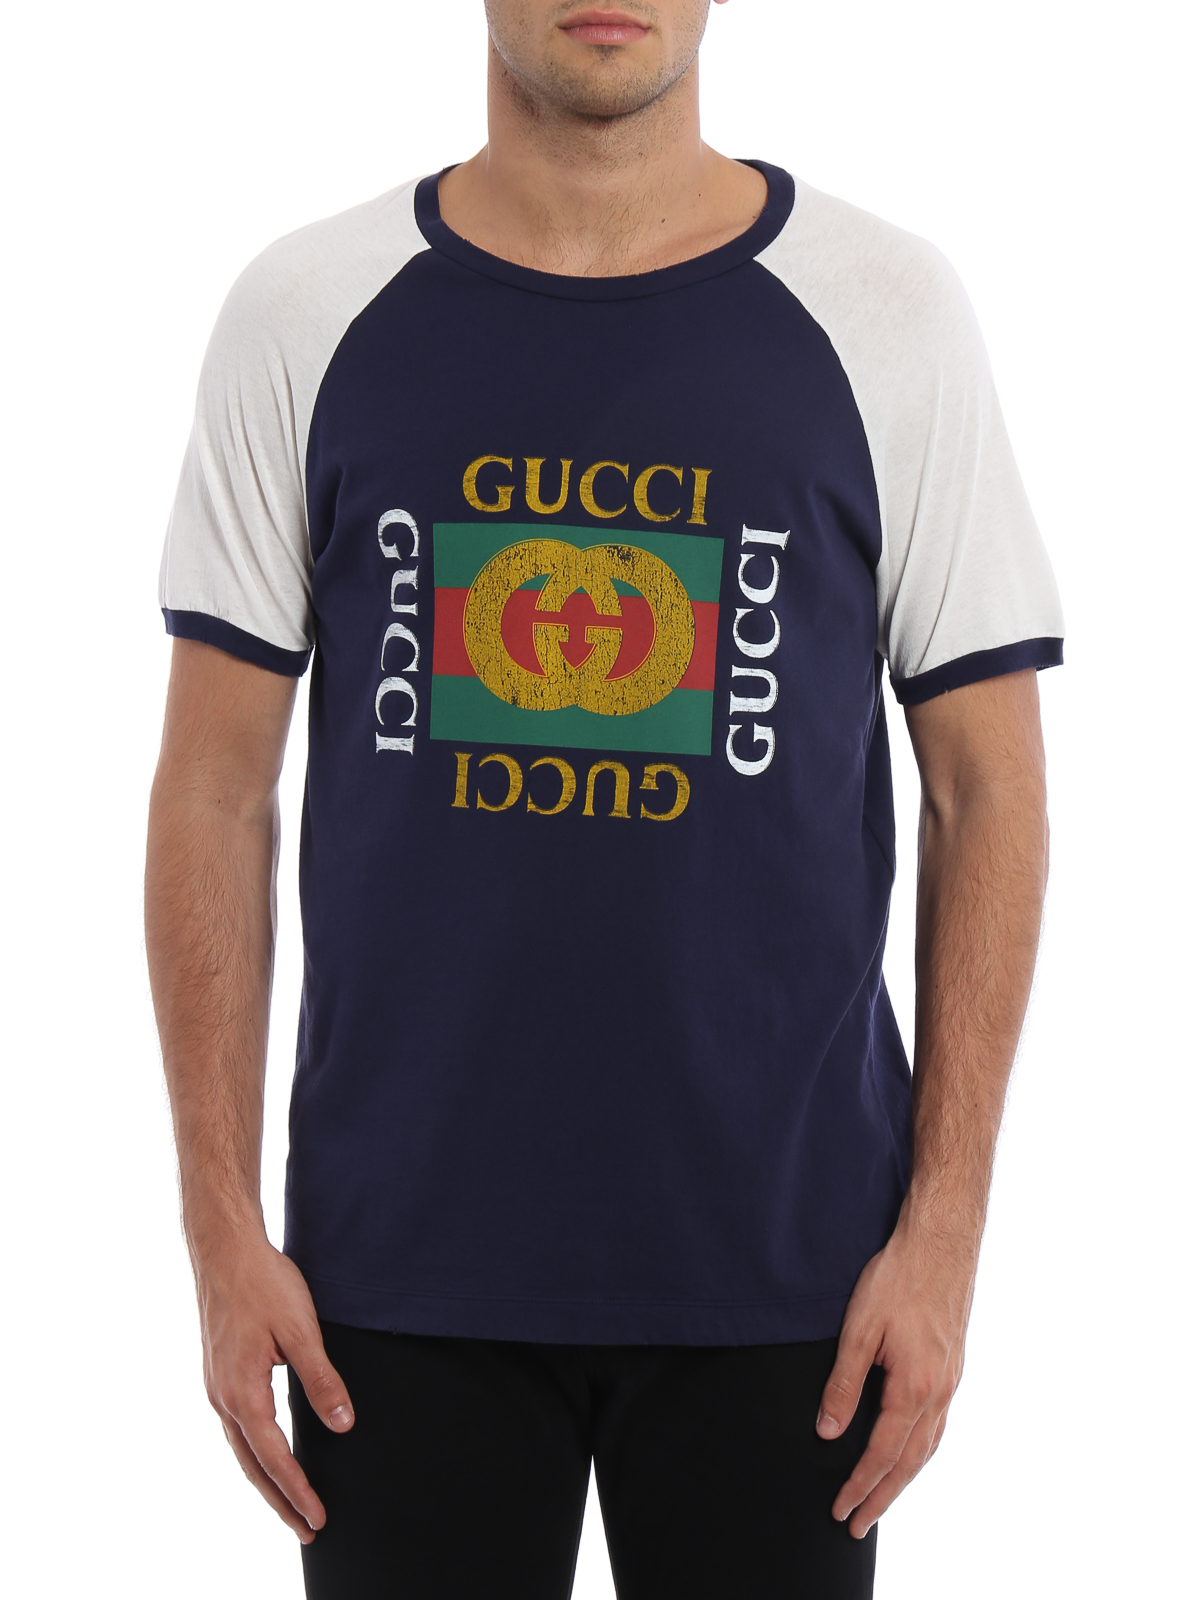 gnocchi gucci shirt amazon